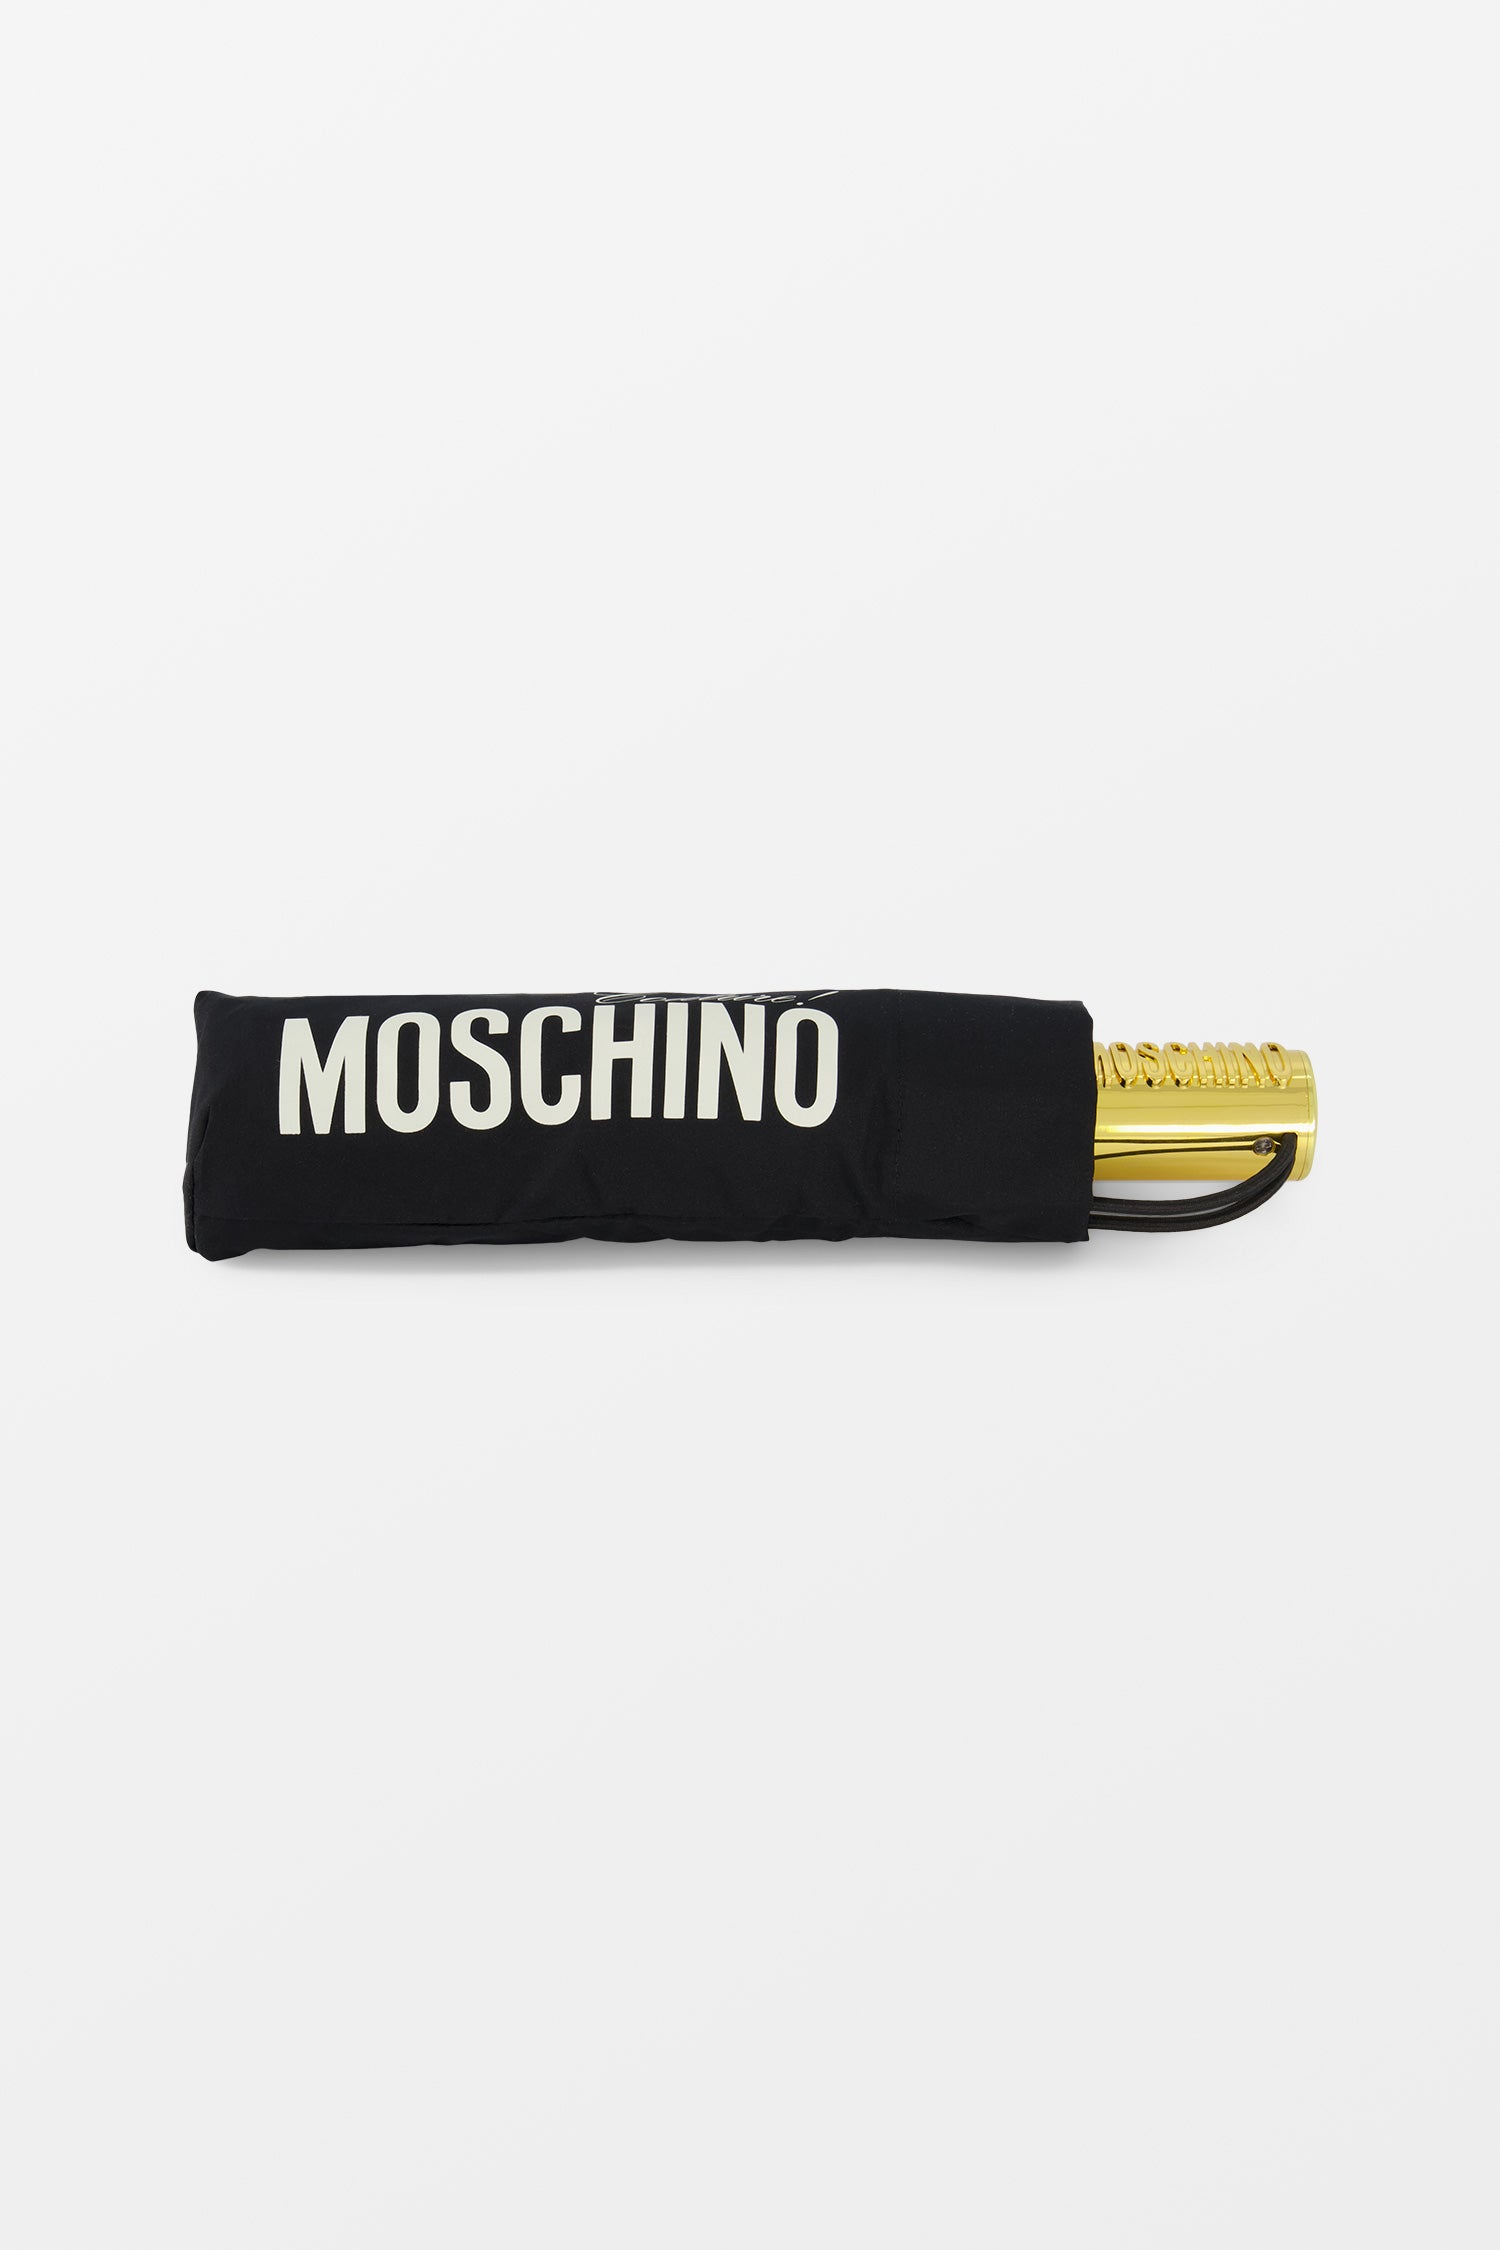 Moschino Couture Black Umbrella